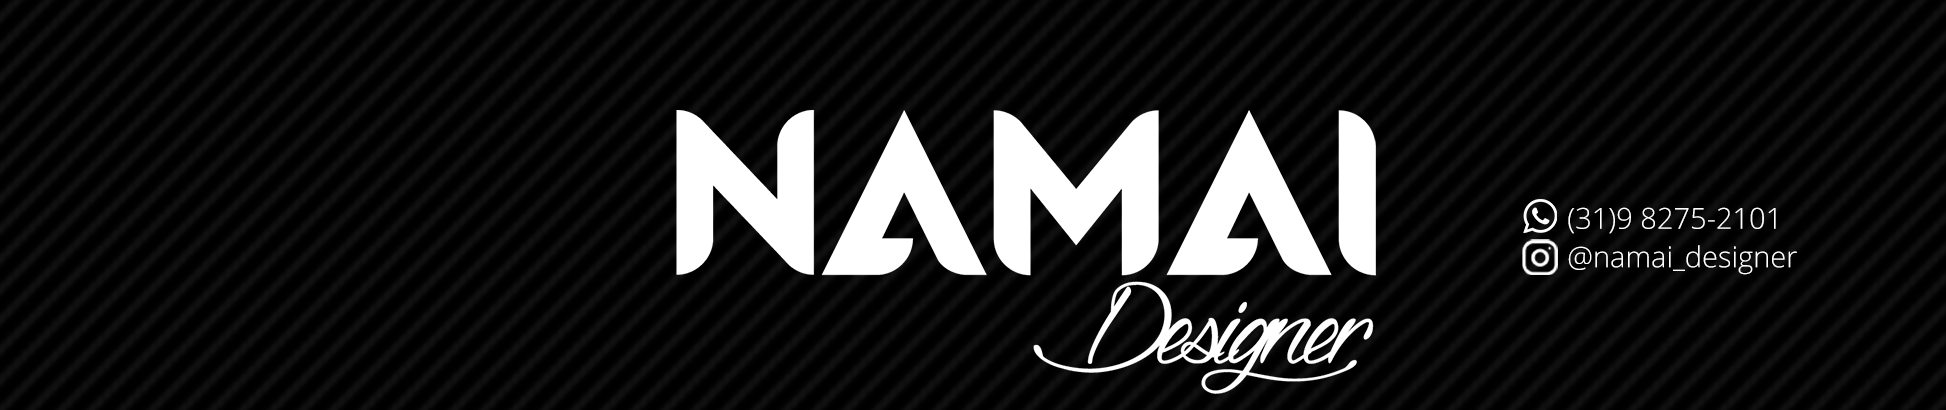 Namai Designer のプロファイルバナー